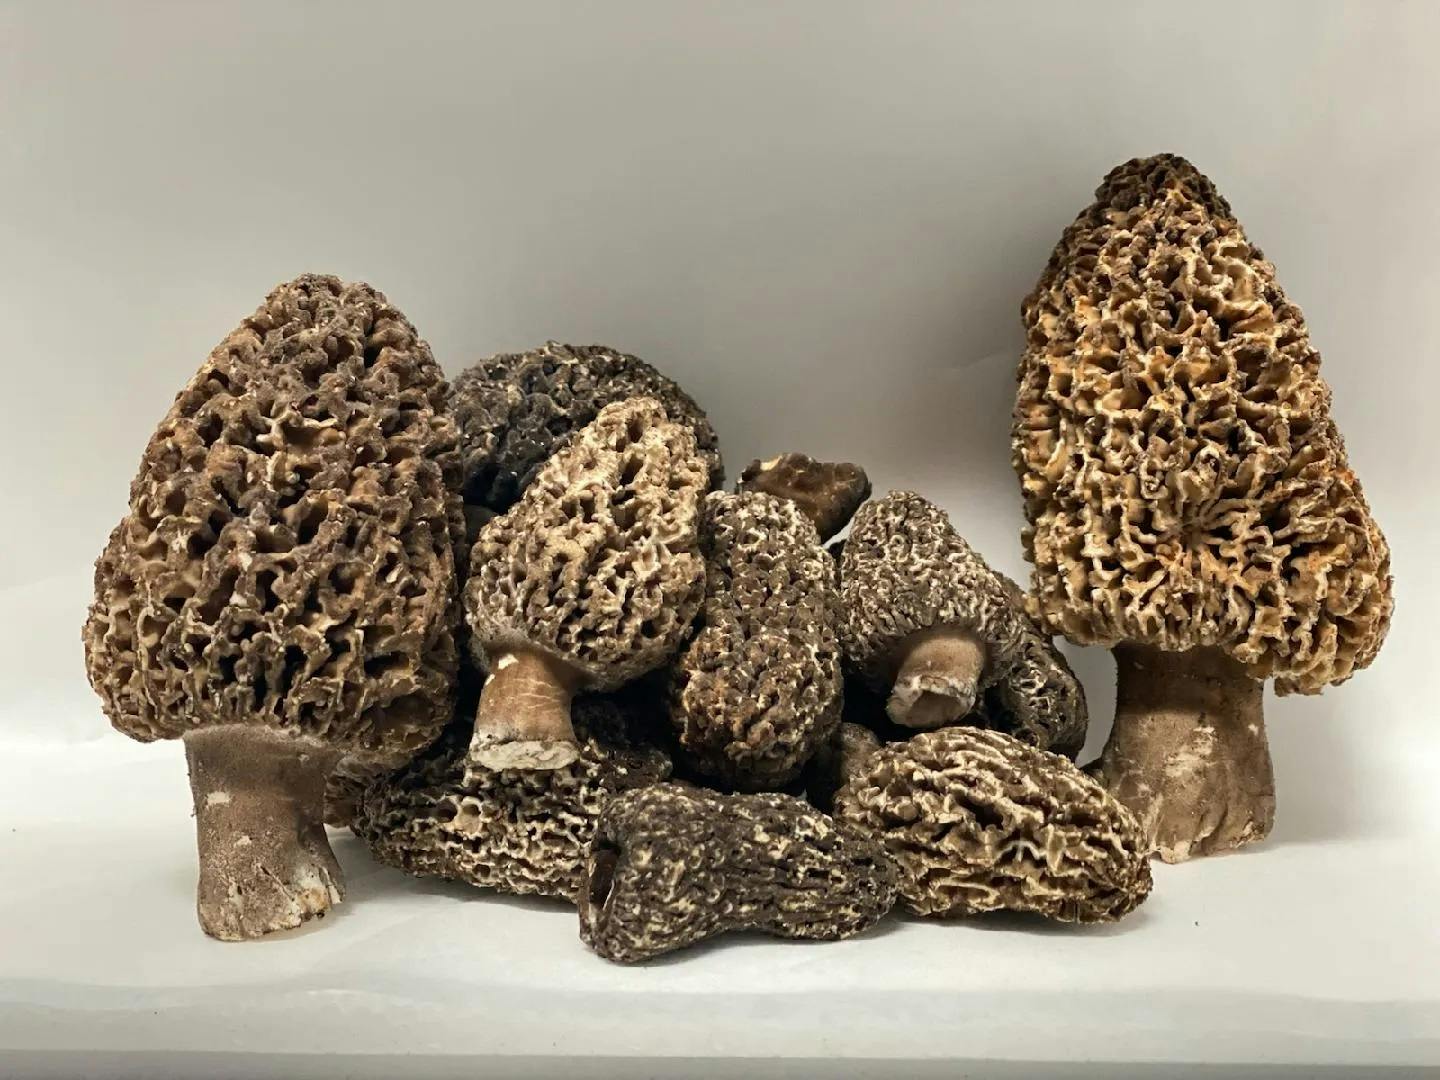 Dried Mushrooms 101